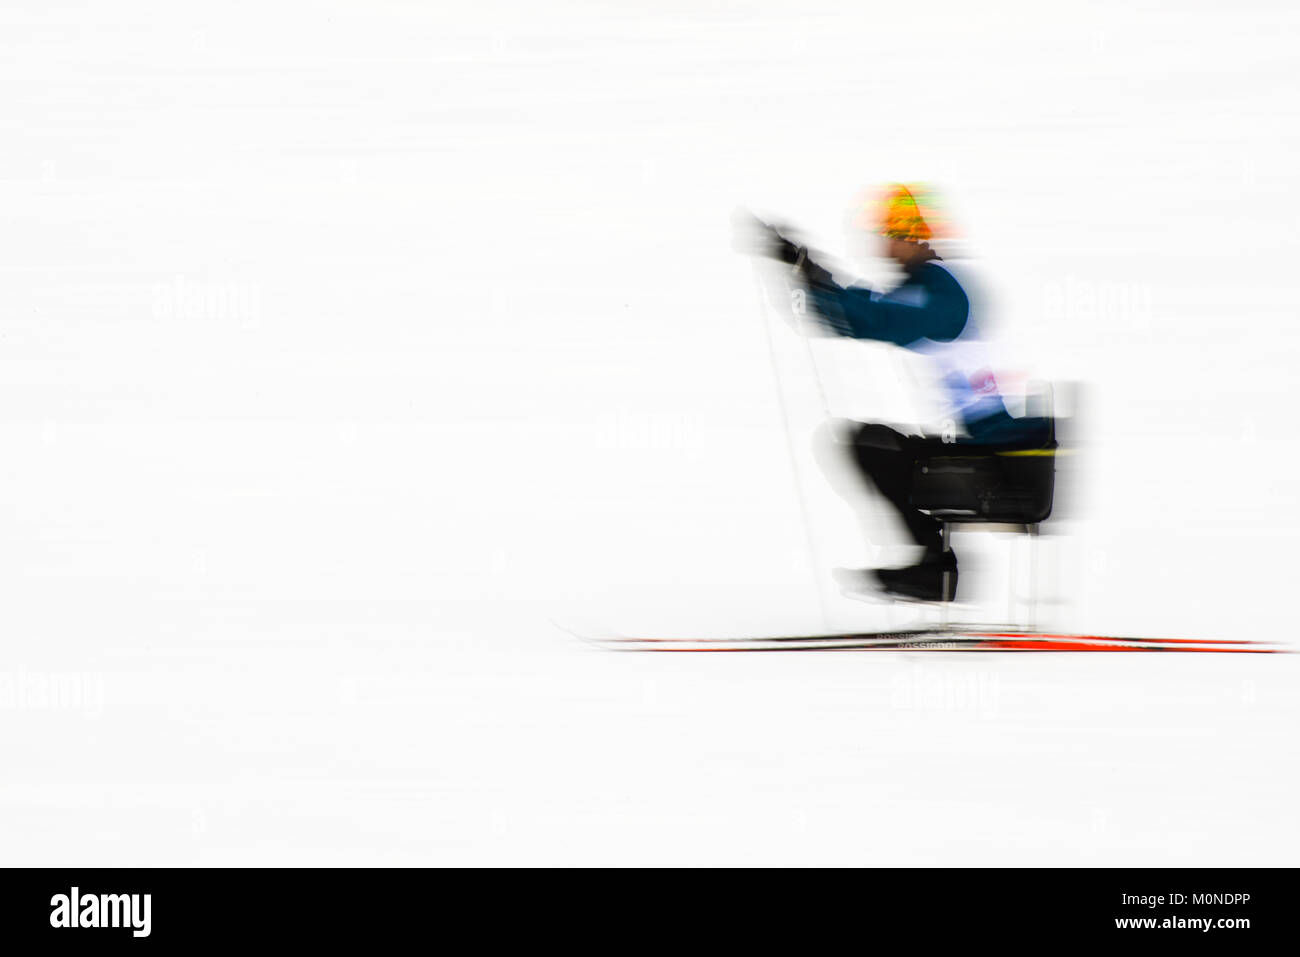 Canada's Yves Bourque, Paralympiques cross country ski racer à 2016 Jeux paralympiques américaine Ski Assis races, Craftsbury Outdoor Centre, Craftsbury, VT, USA. Banque D'Images